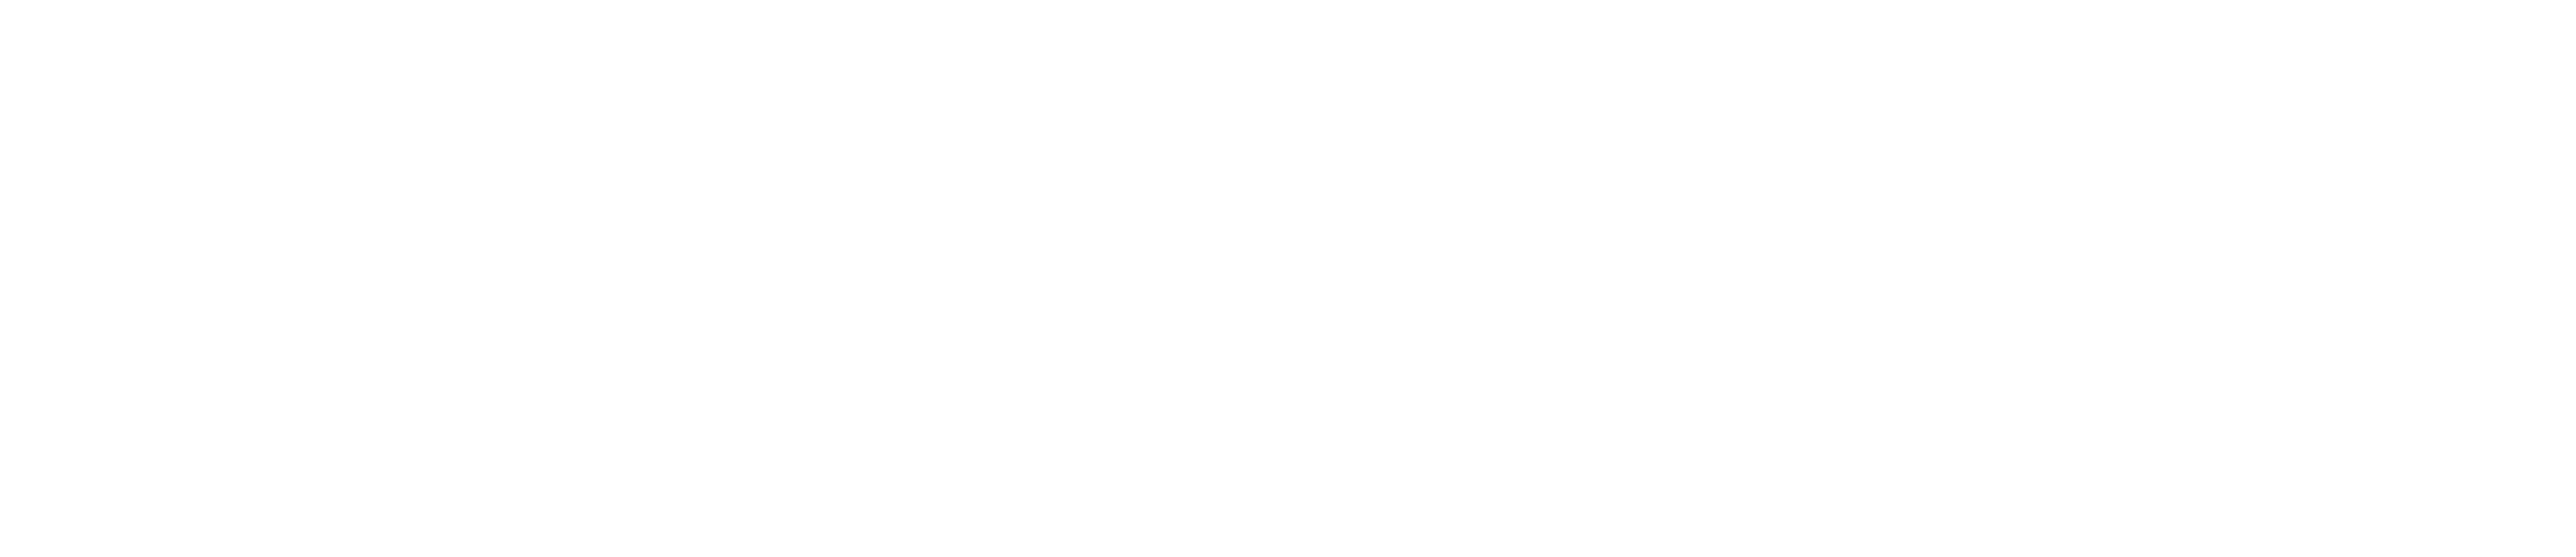 Magpie Cloud Technology